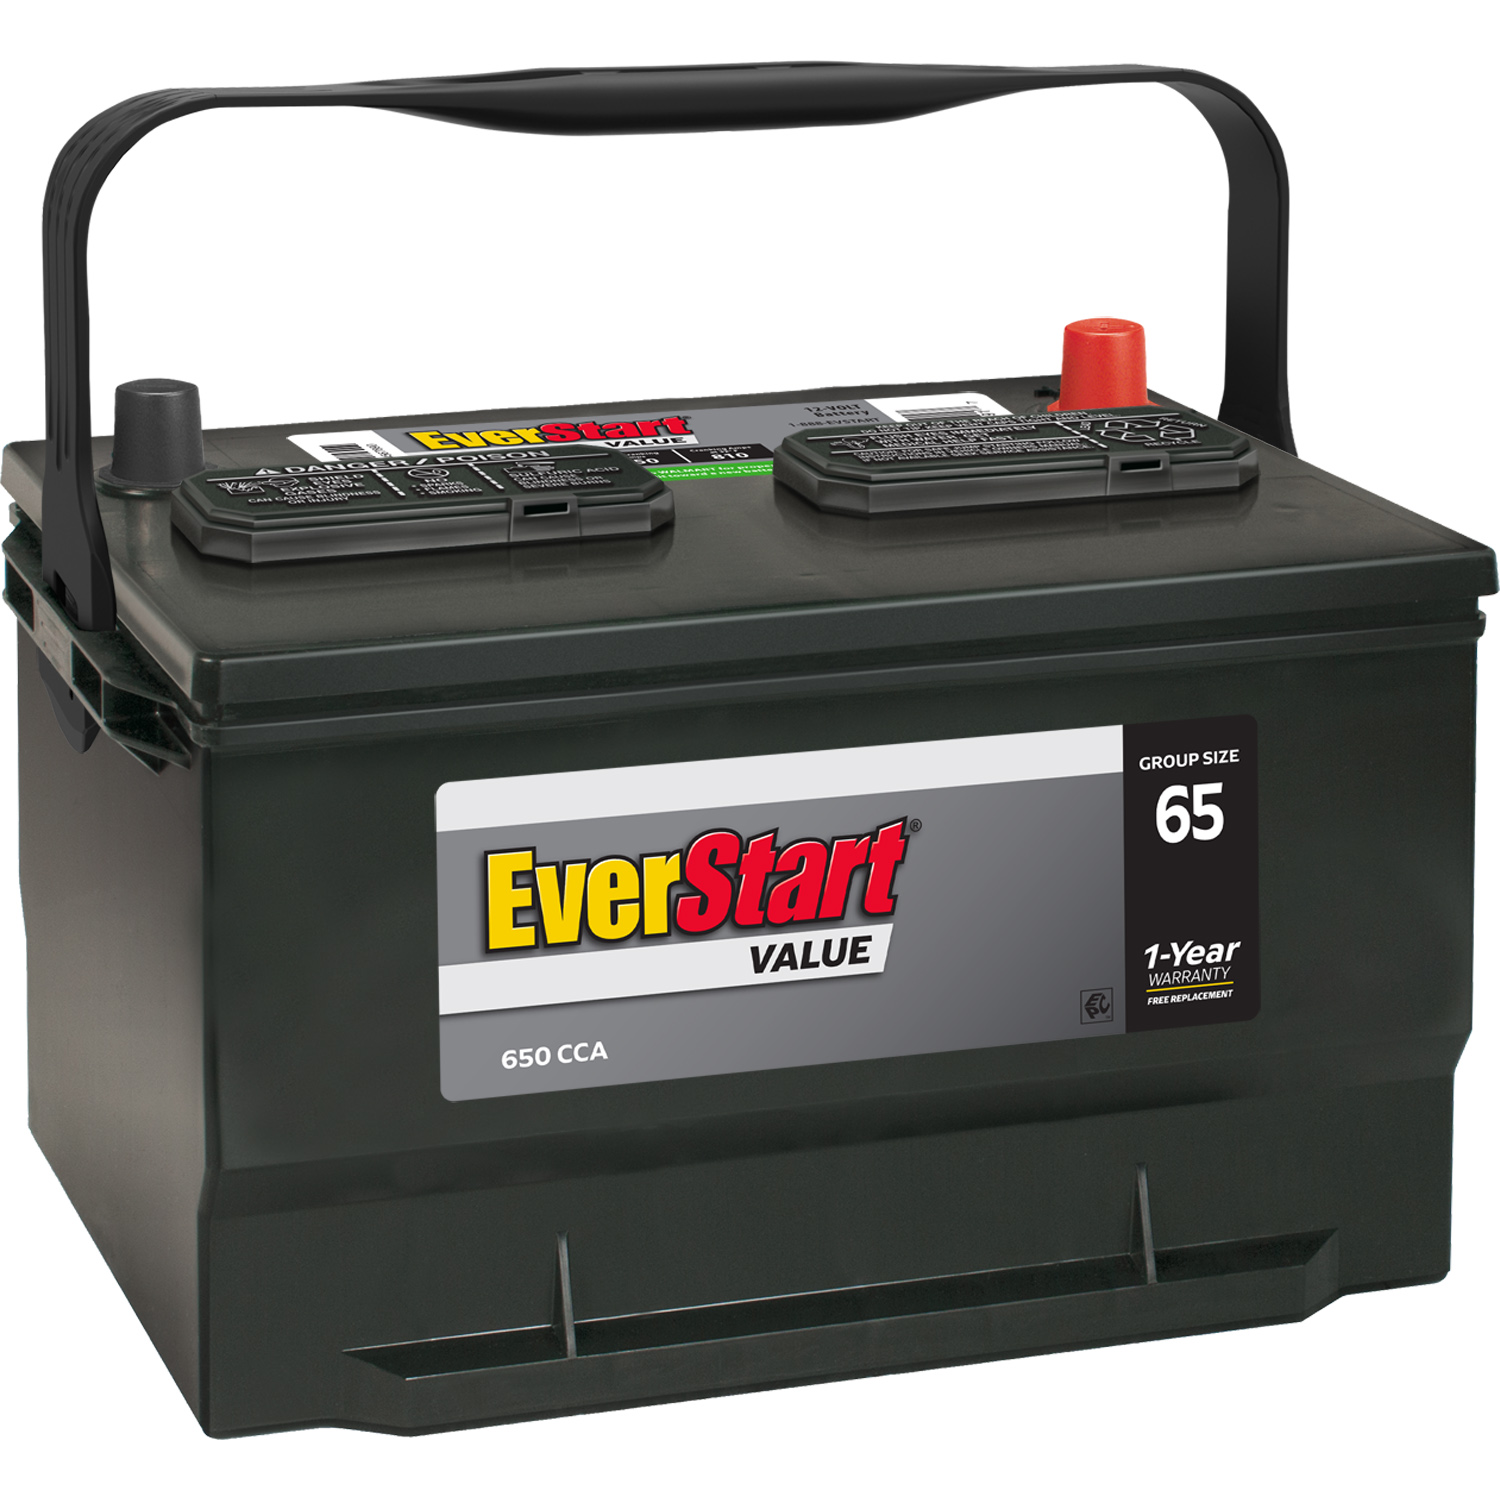 EverStart Value Lead Acid Automotive Battery, Group Size 65 12 Volts, 650 CCA - image 1 of 7